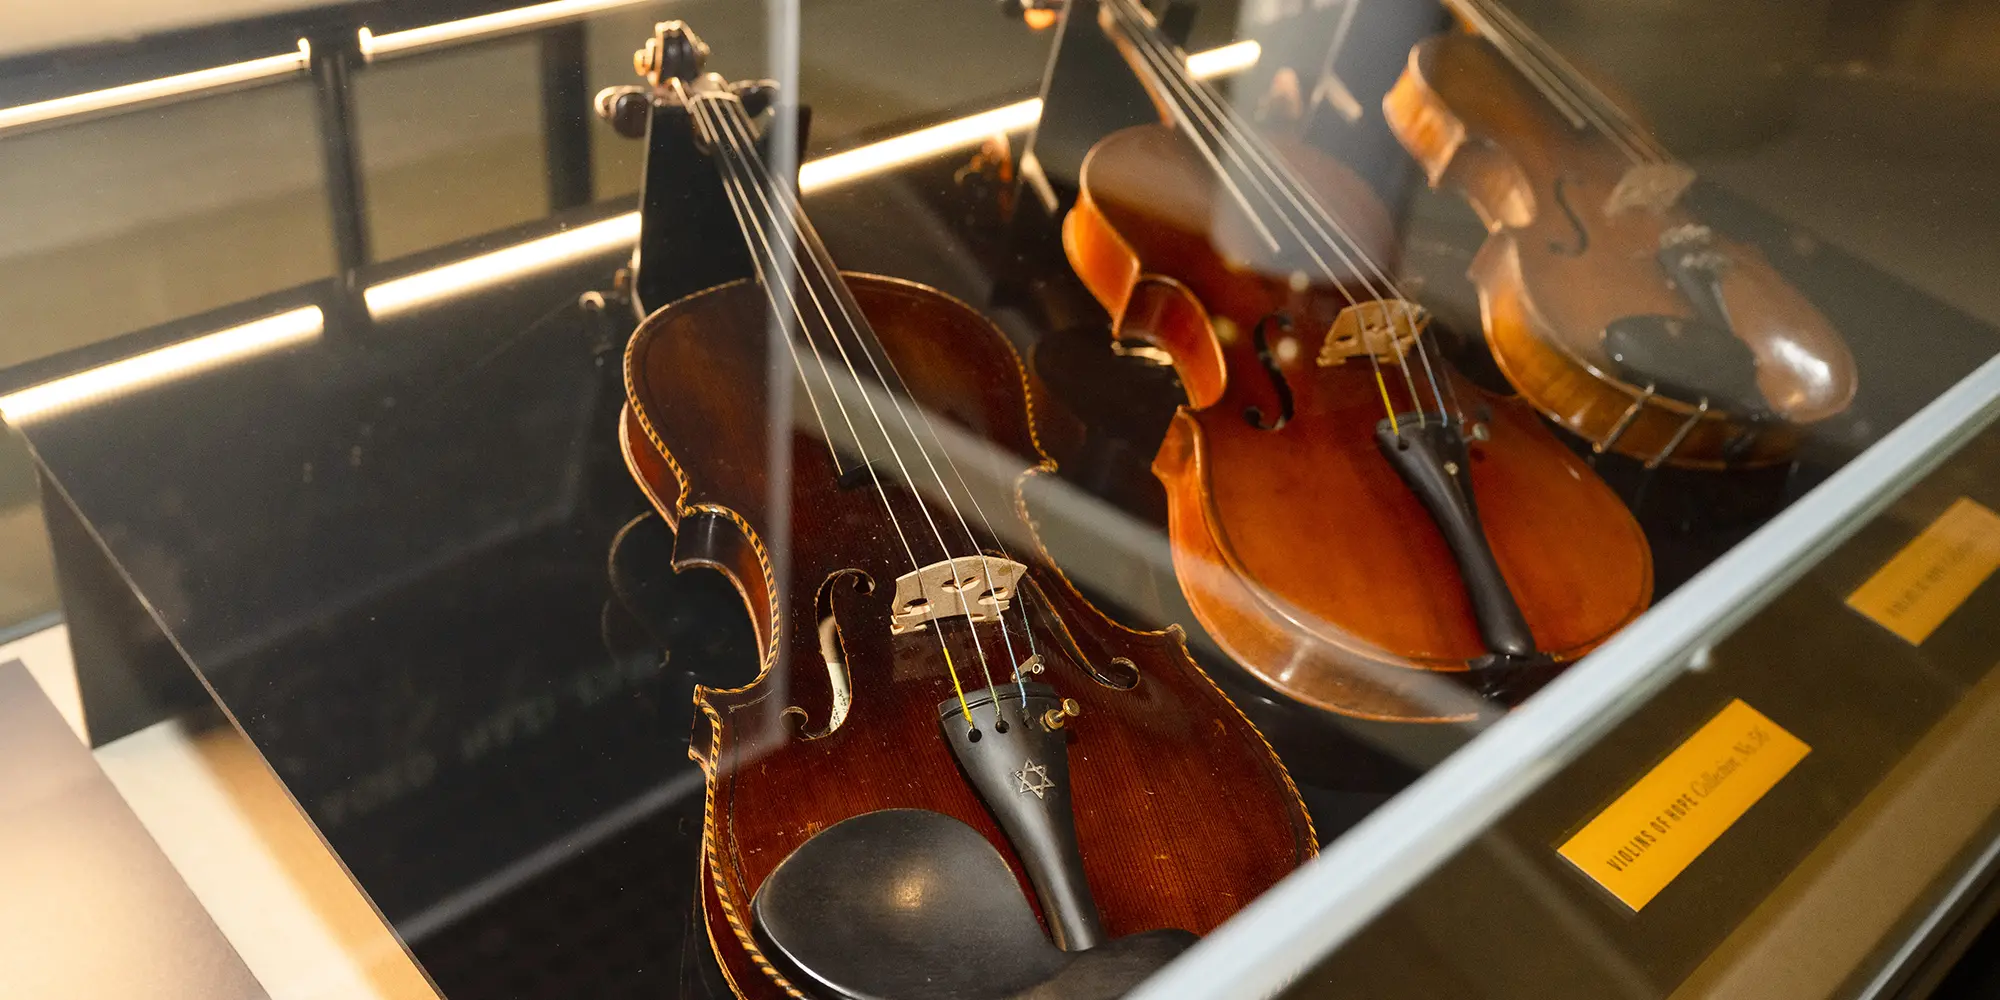 three violins displayed inside clear case